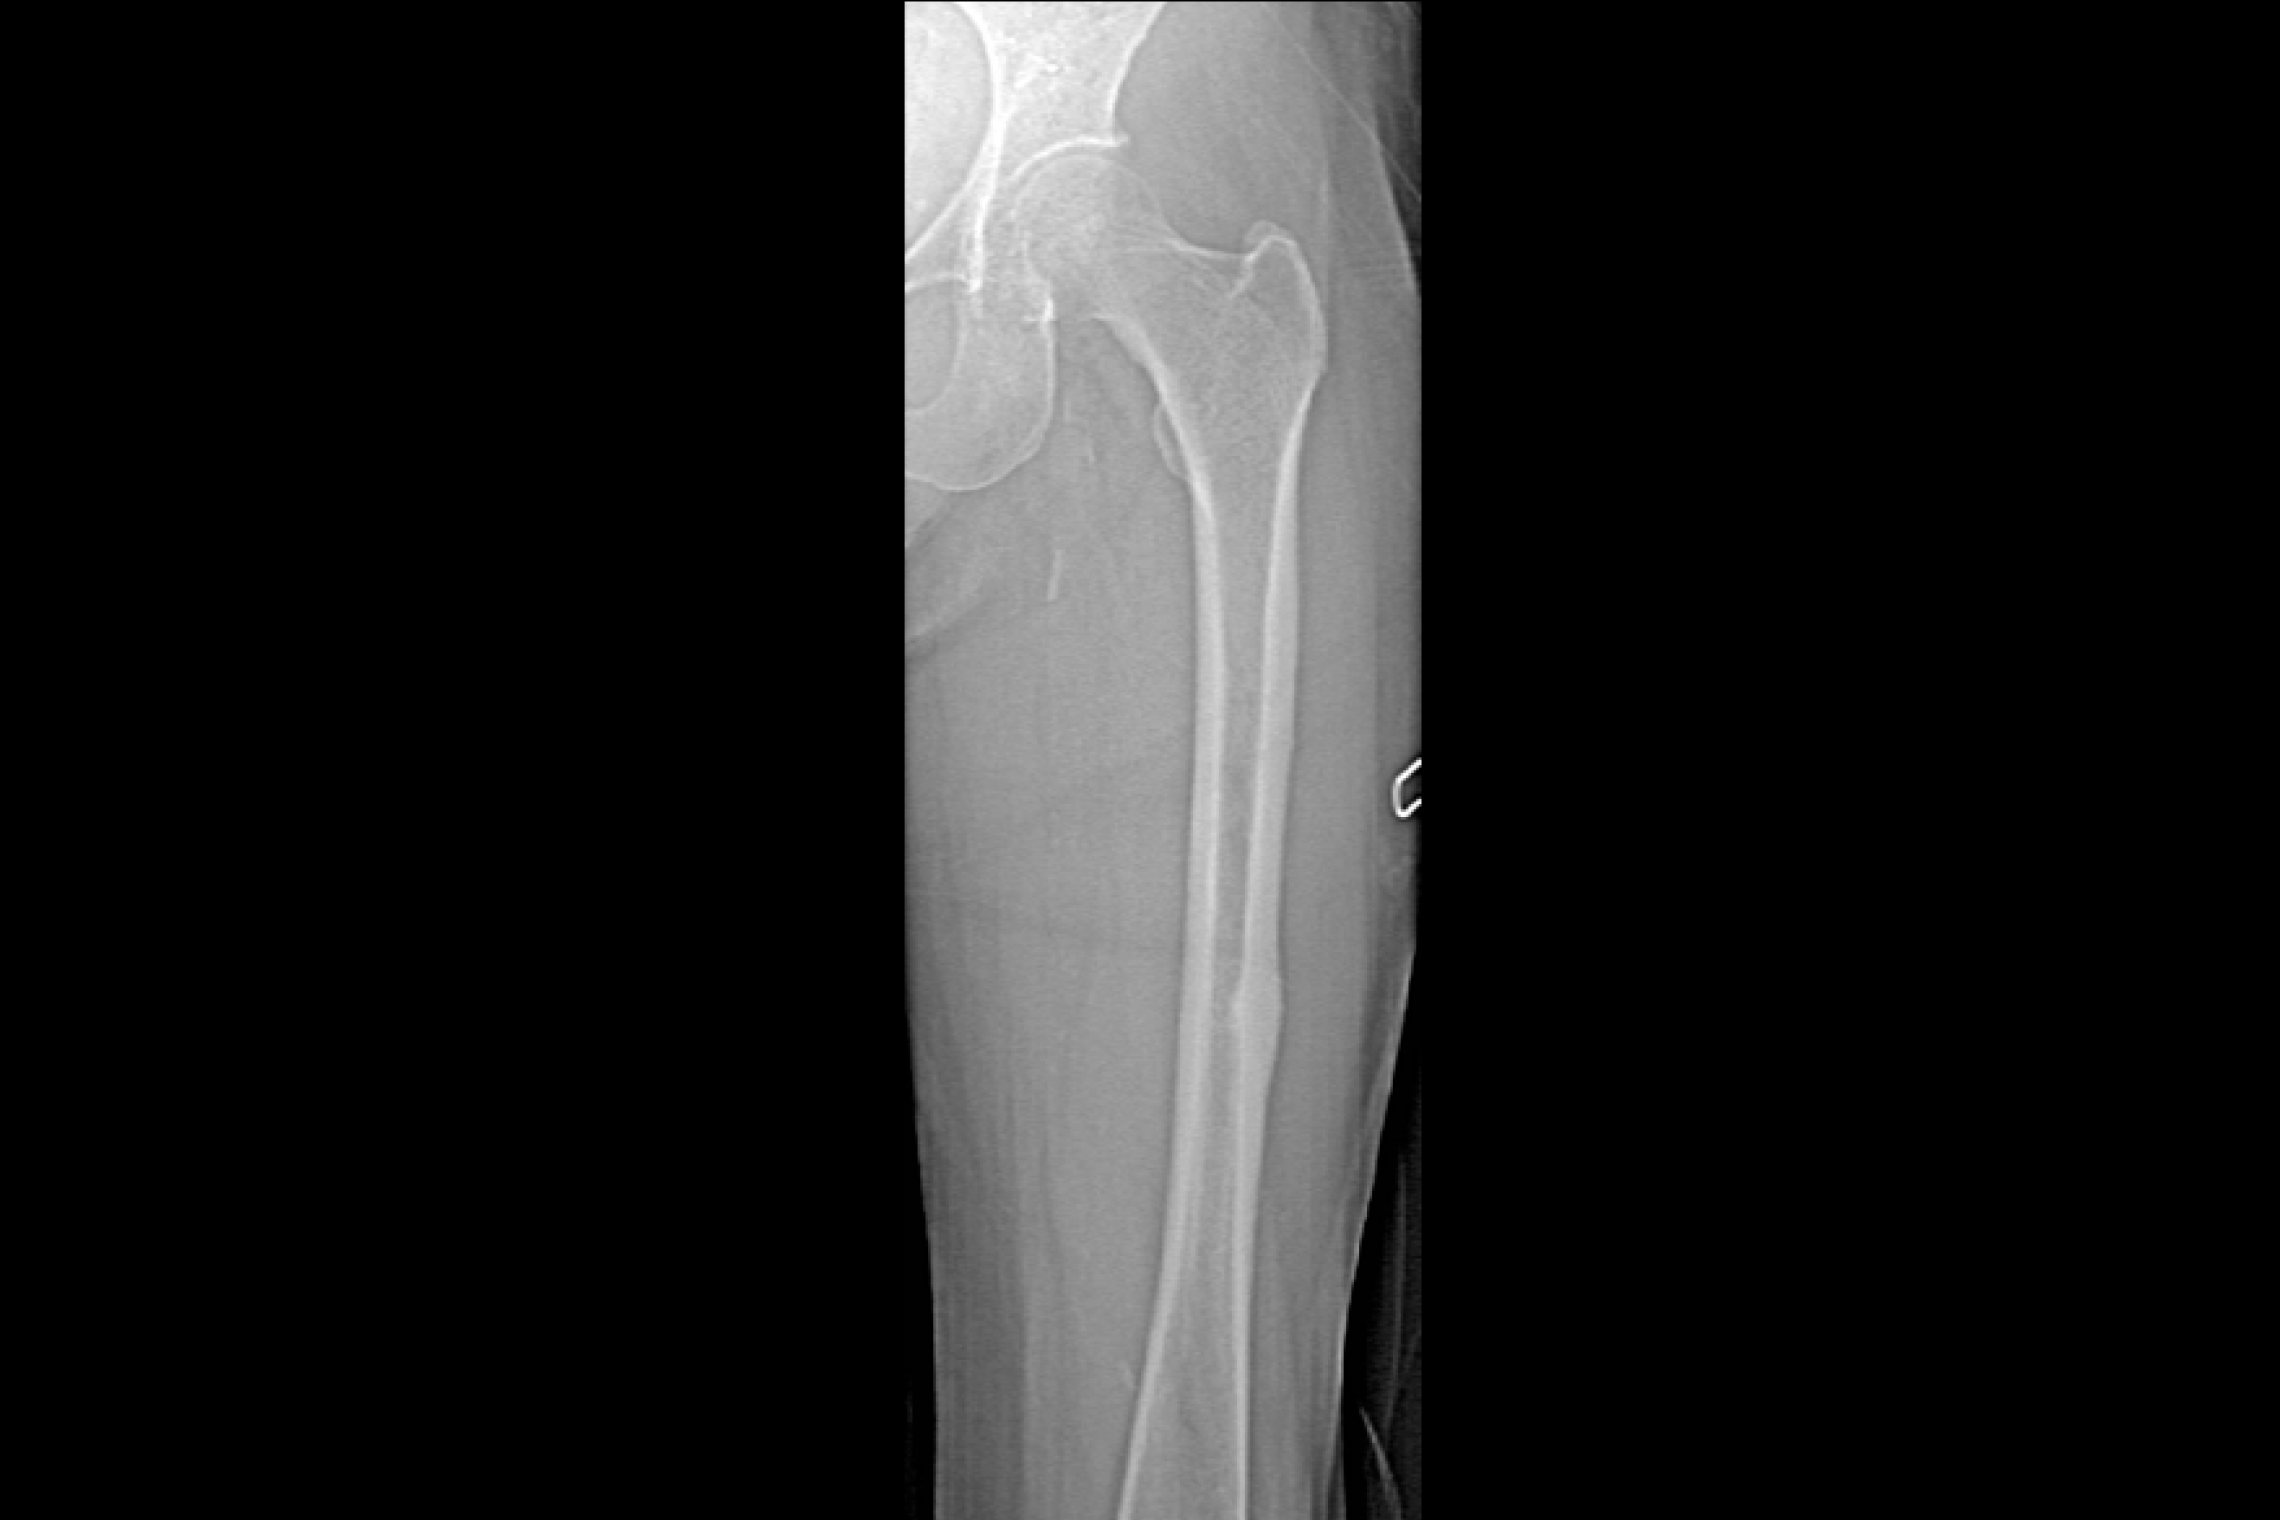 x-ray of femur